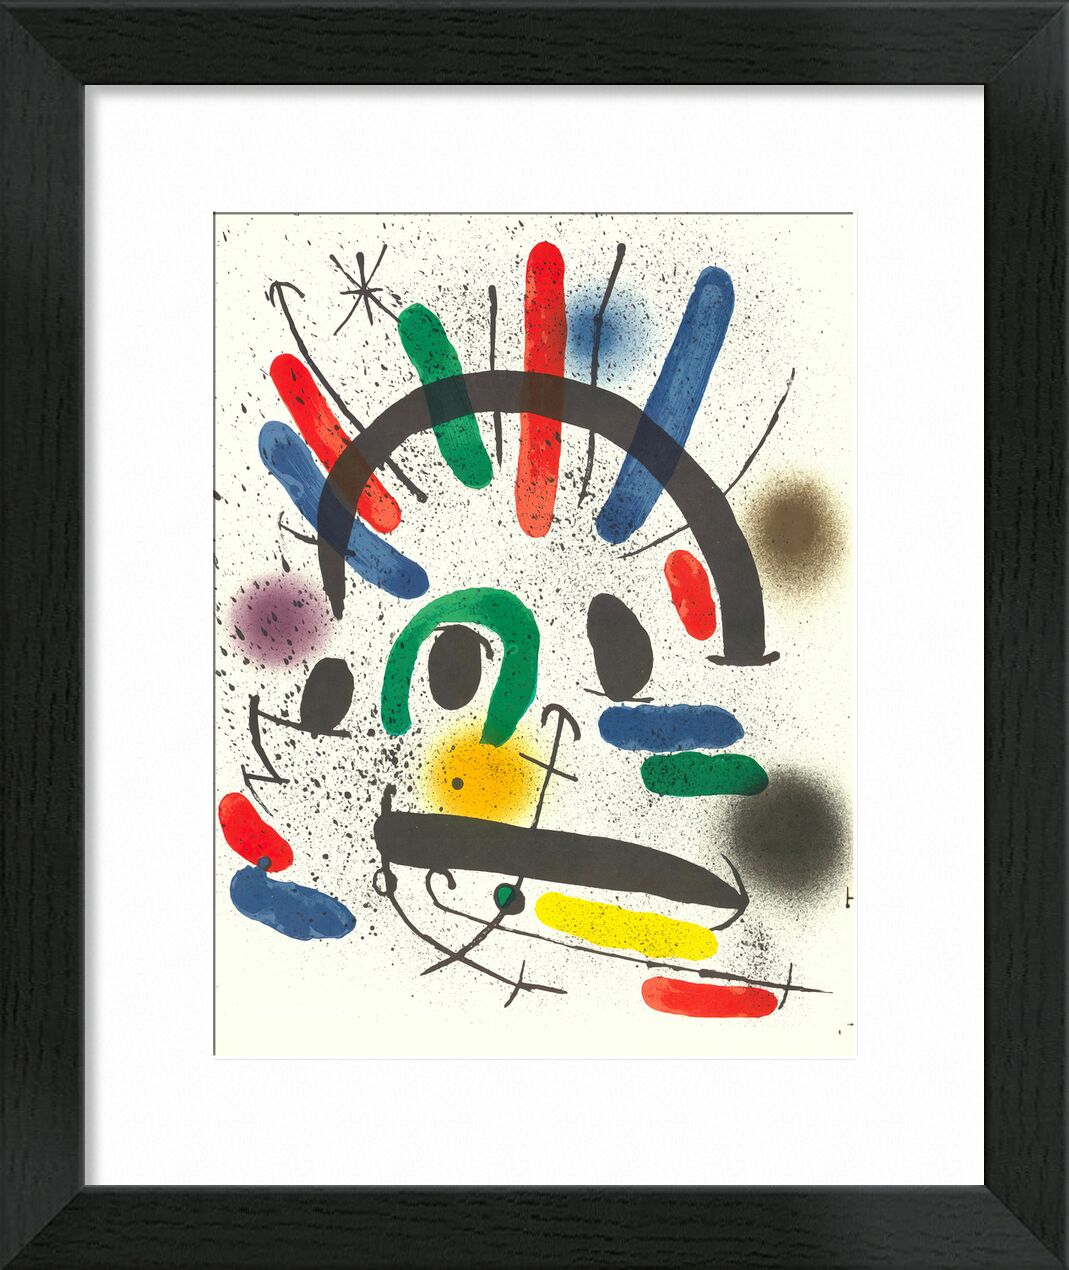 Litografia original II - Joan Miró von Bildende Kunst, Prodi Art, Joan Miró, Malerei, abstrakt, Lithografie